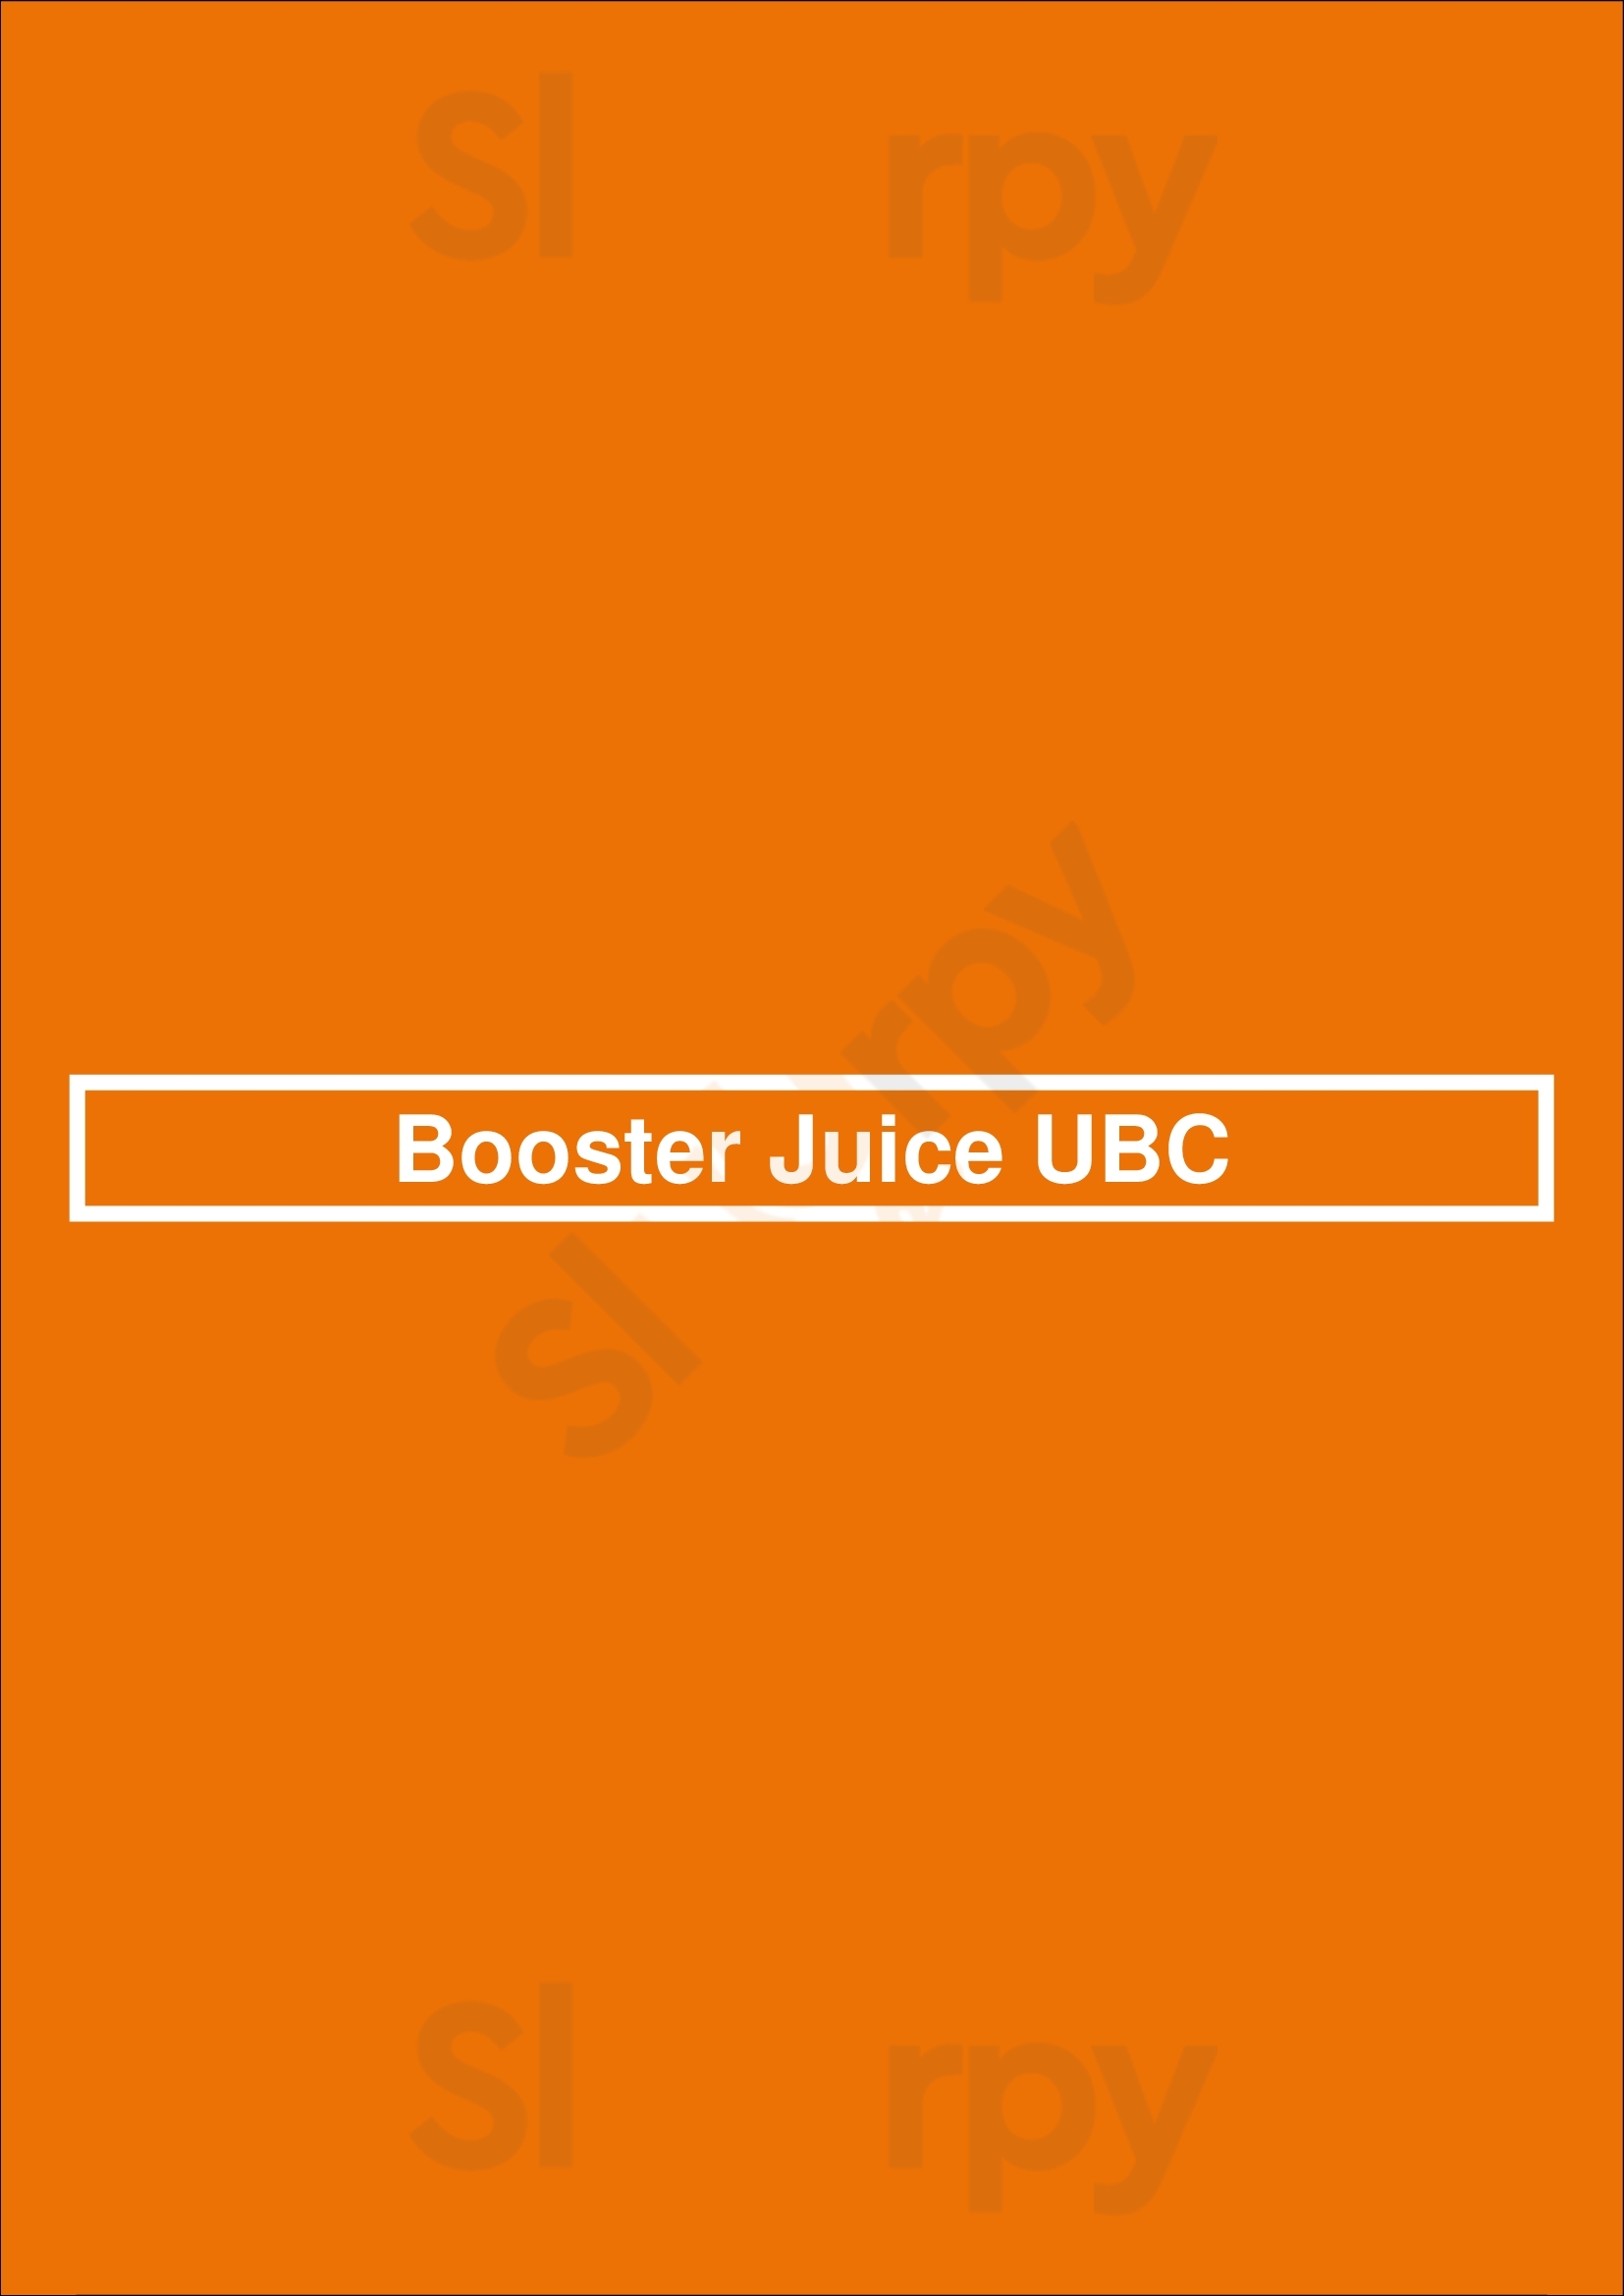 Booster Juice Ubc Vancouver Menu - 1